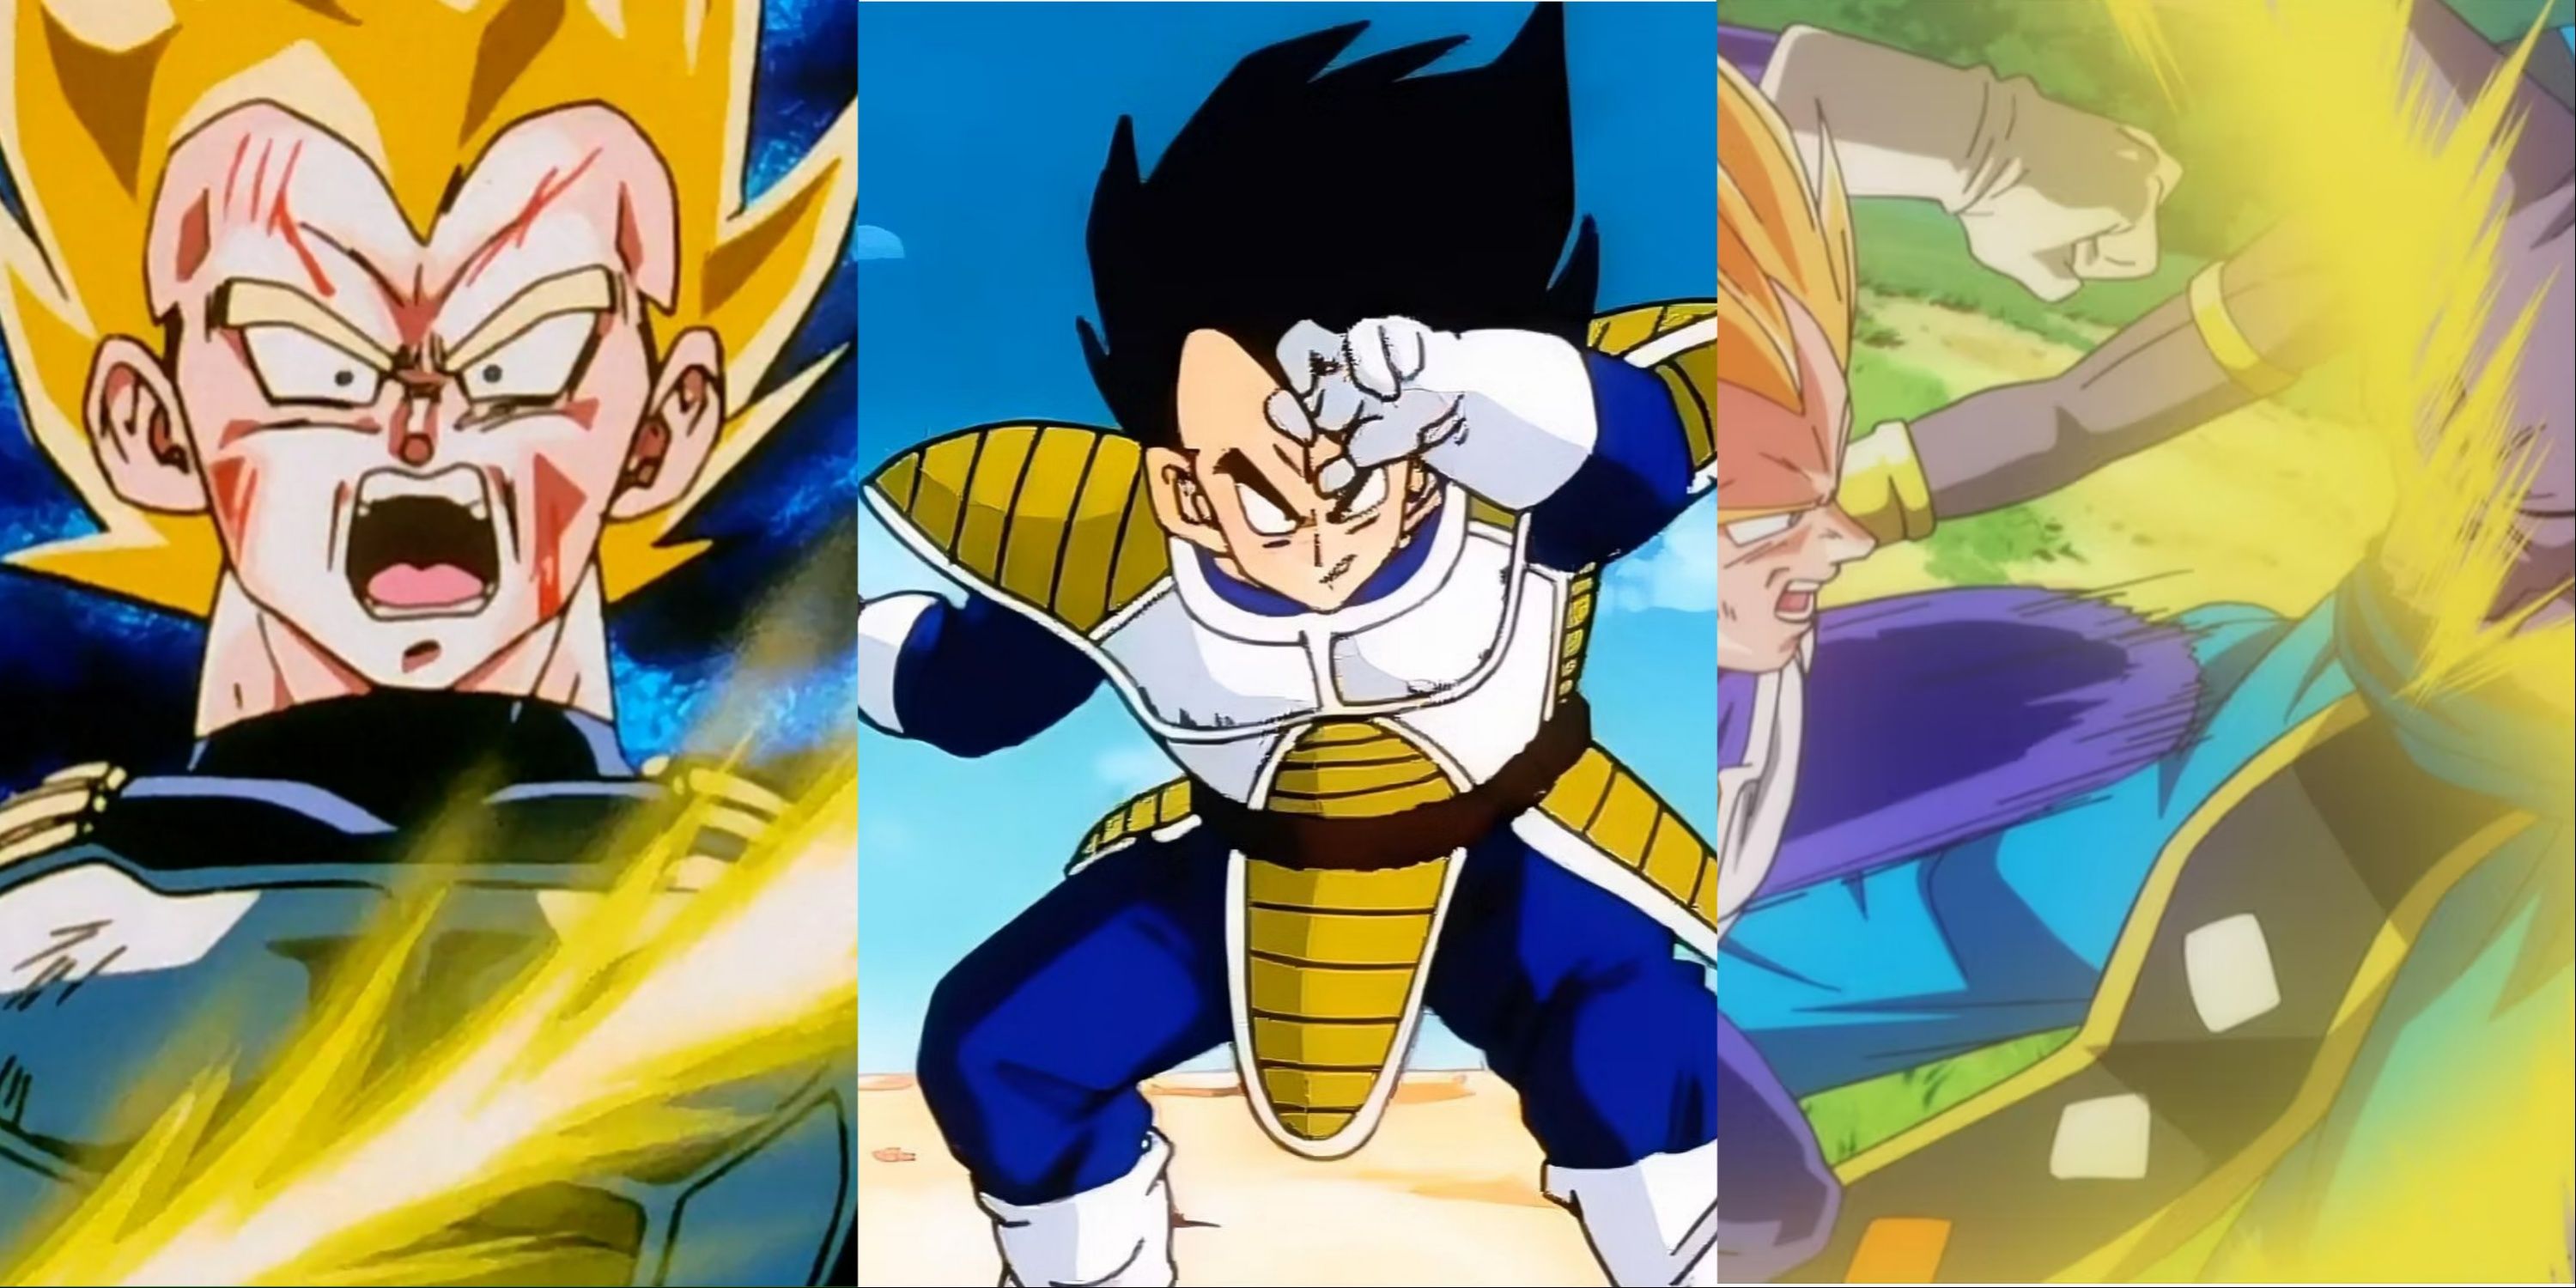 Vegeta First Super Saiyan Transformation, First Fight With Goku, and Defending Bulma Dragon Ball Collage